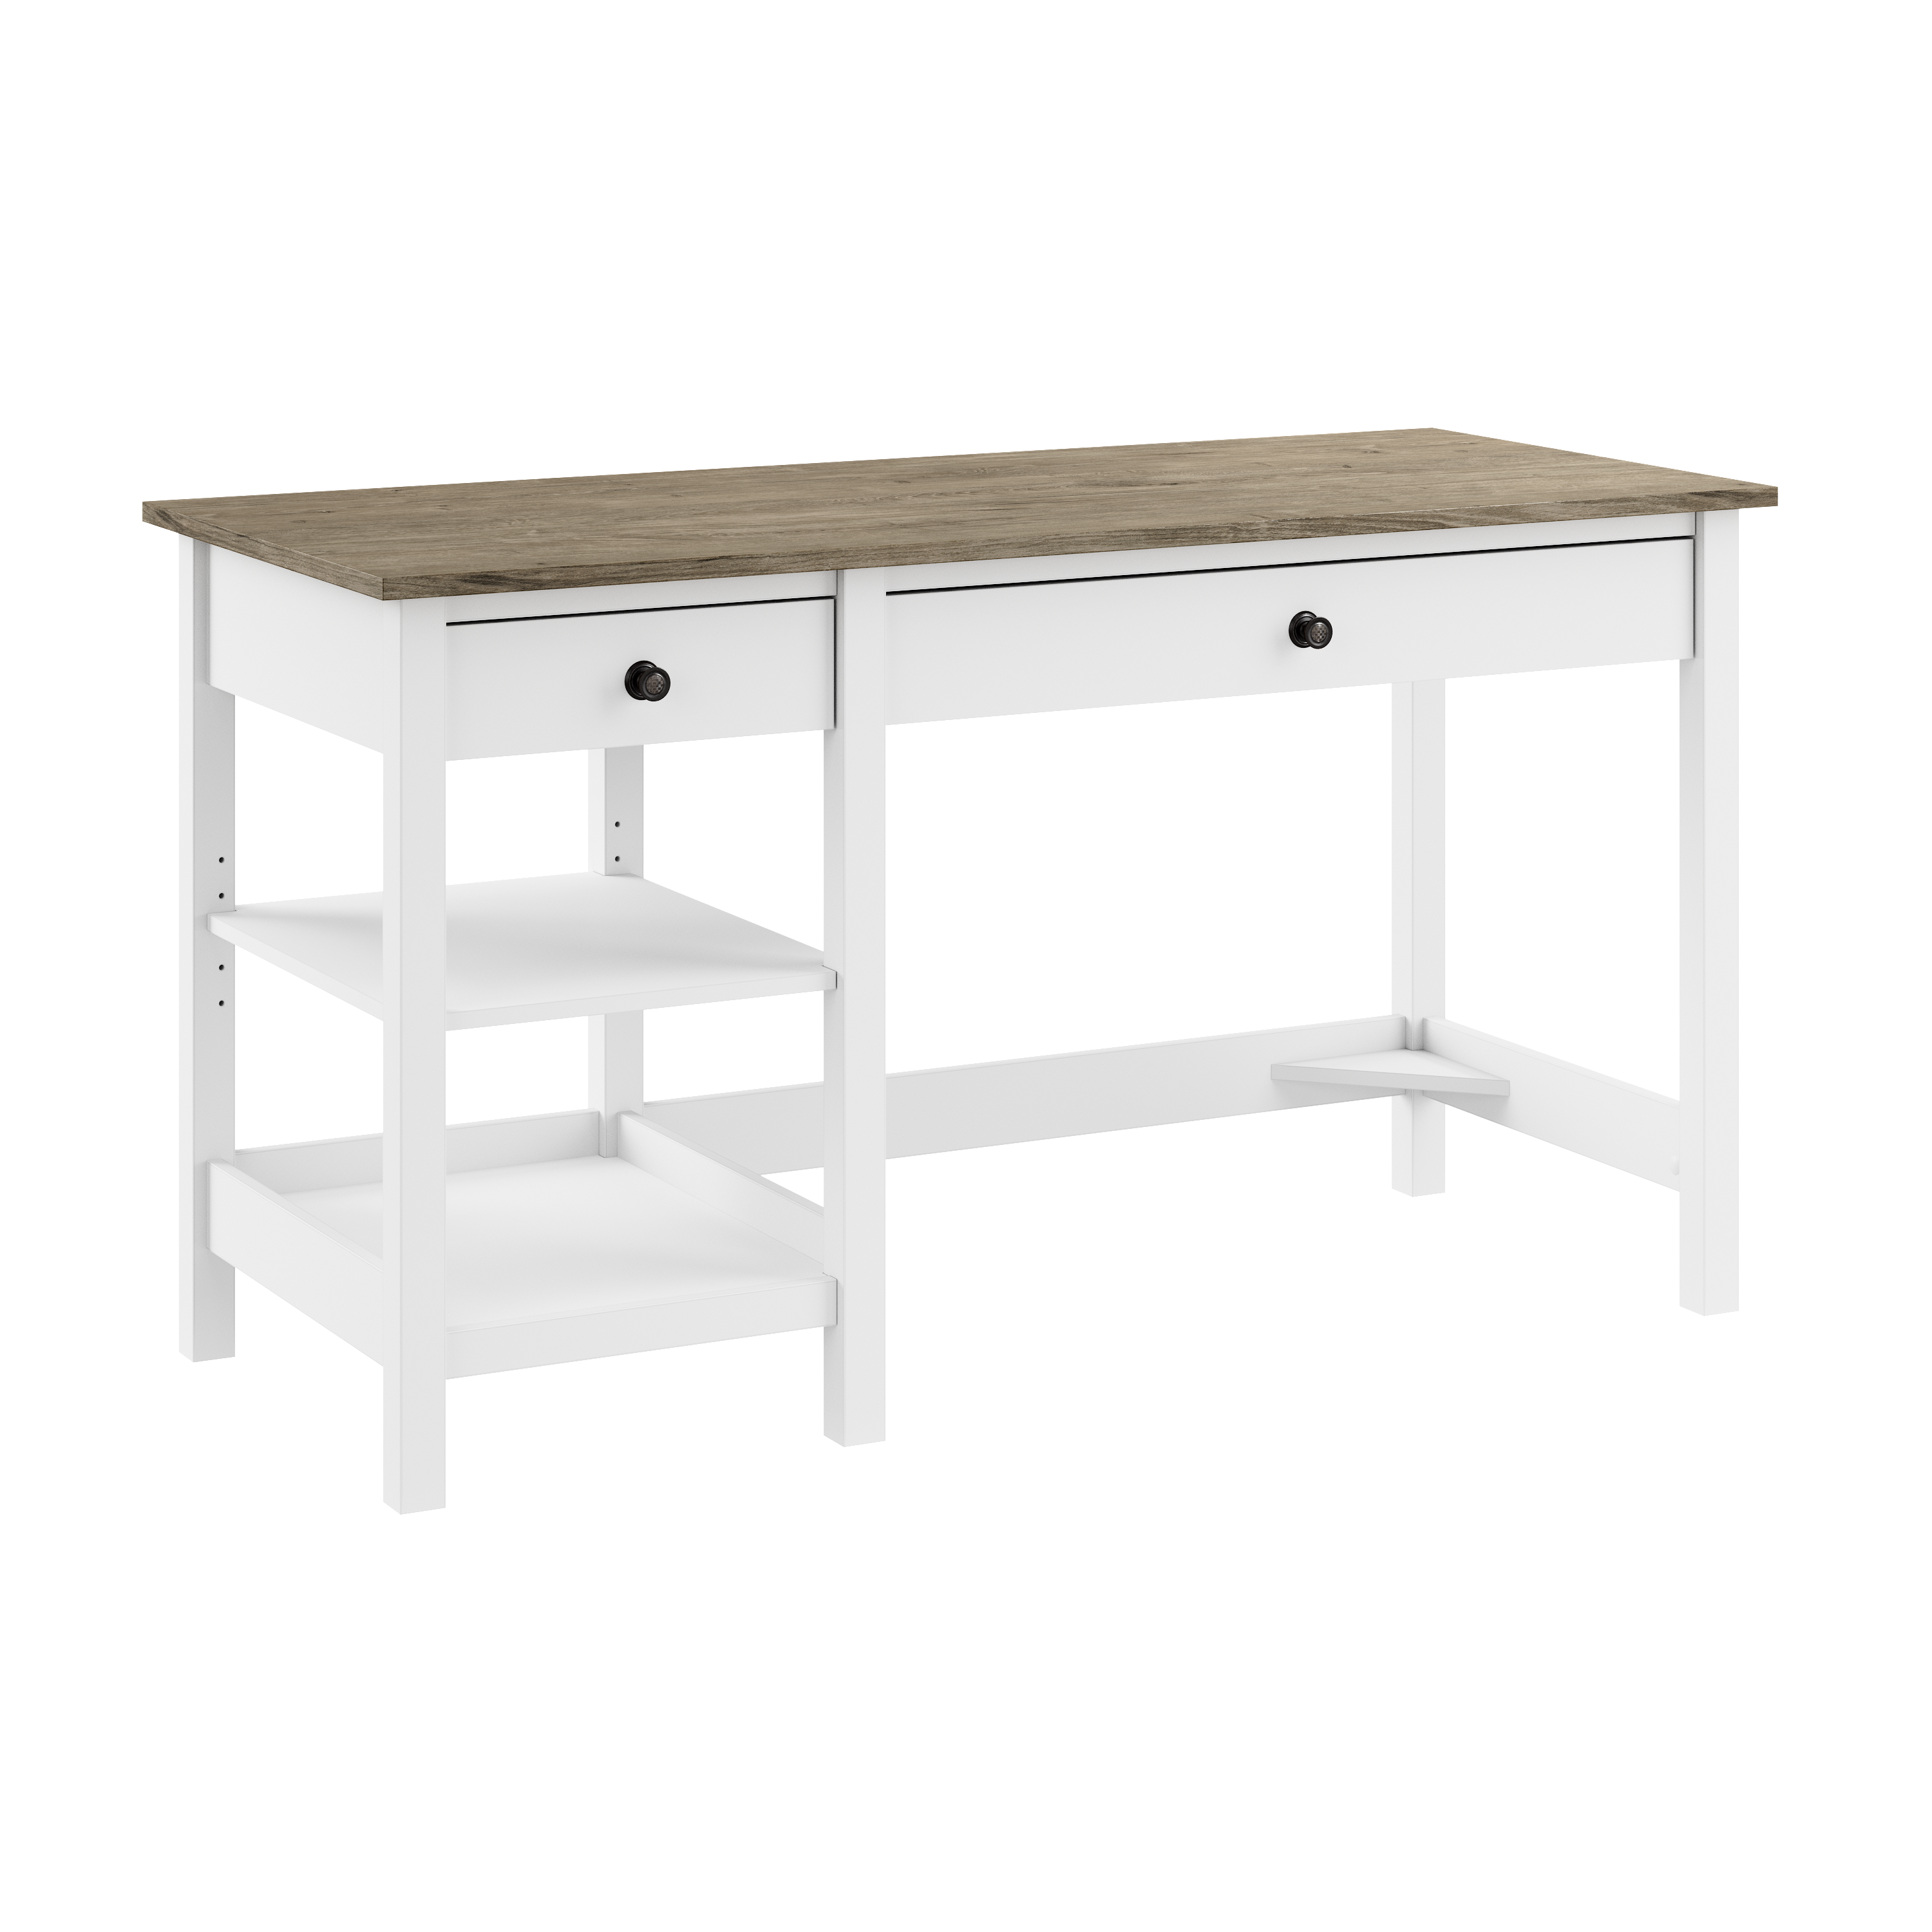 Shop Bush Furniture Mayfield 54W Computer Desk with Shelves 02 MAD154GW2-03 #color_shiplap gray/pure white